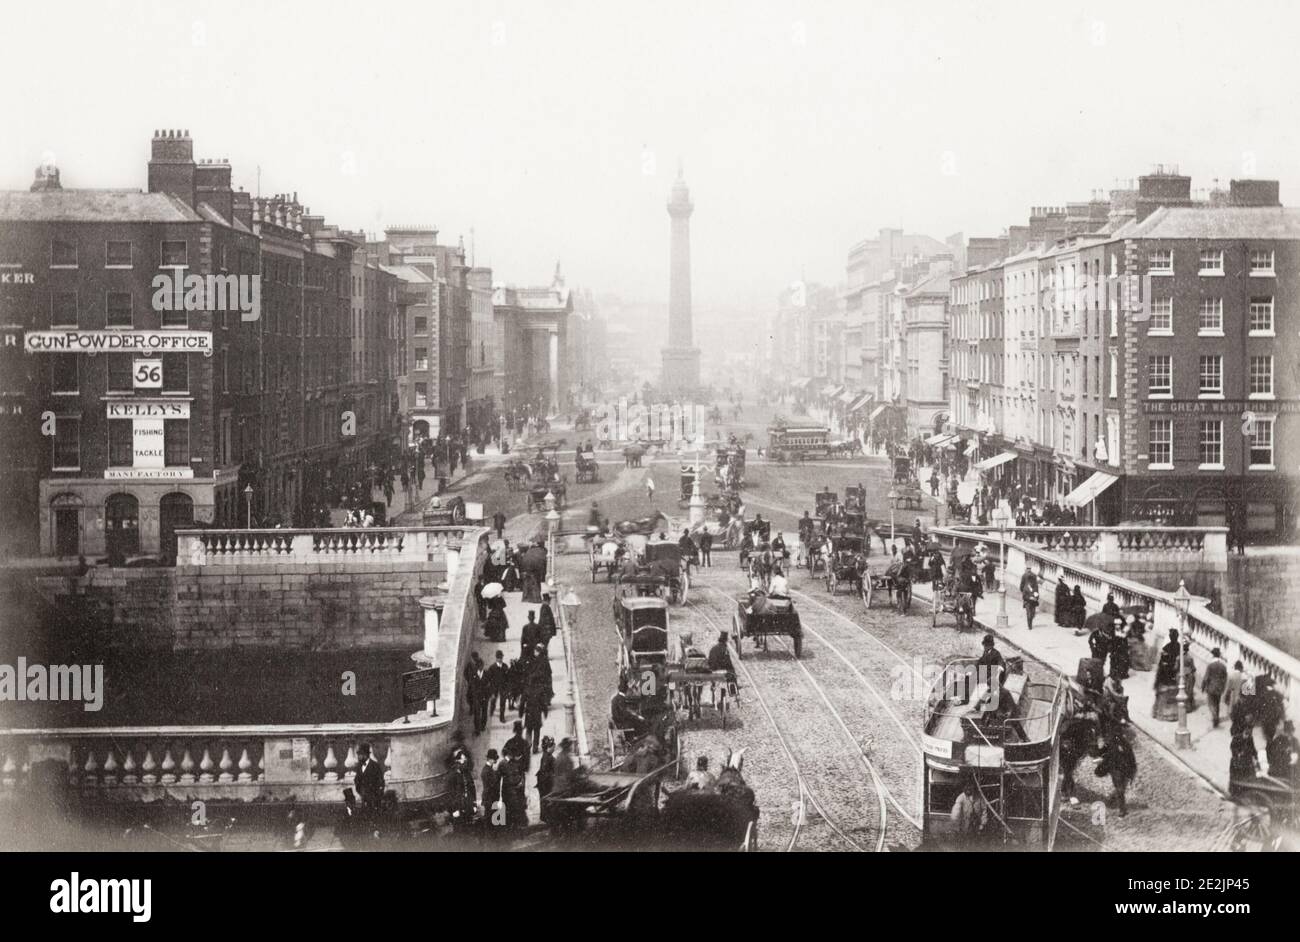 19esimo secolo vintage fotografia: Traffico su Sackville Street, Dublino, ora o'Connell Street. circa 1890 Foto Stock